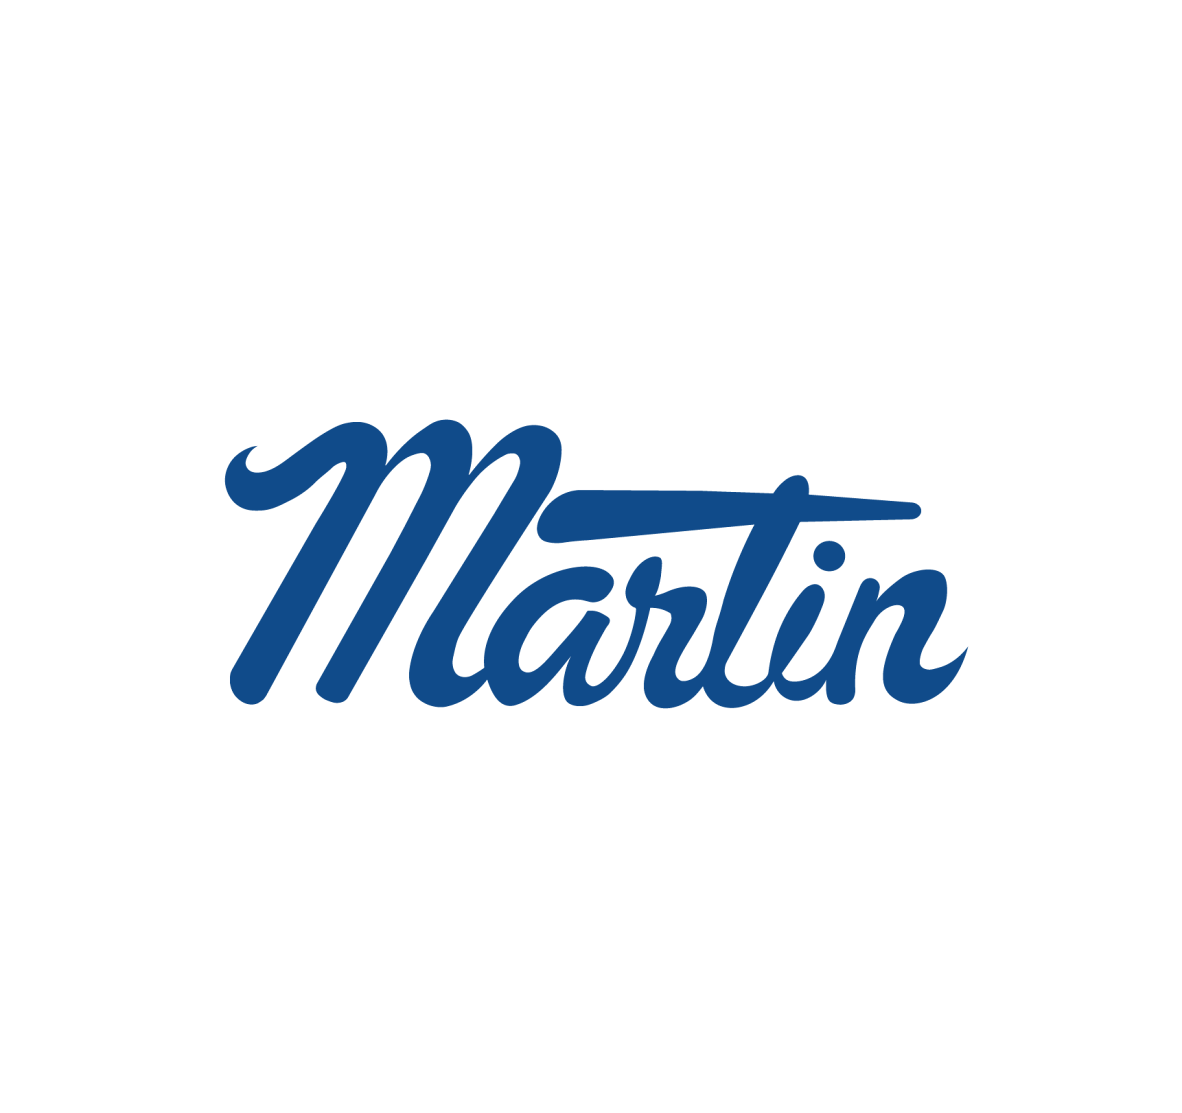 Martin V2.png